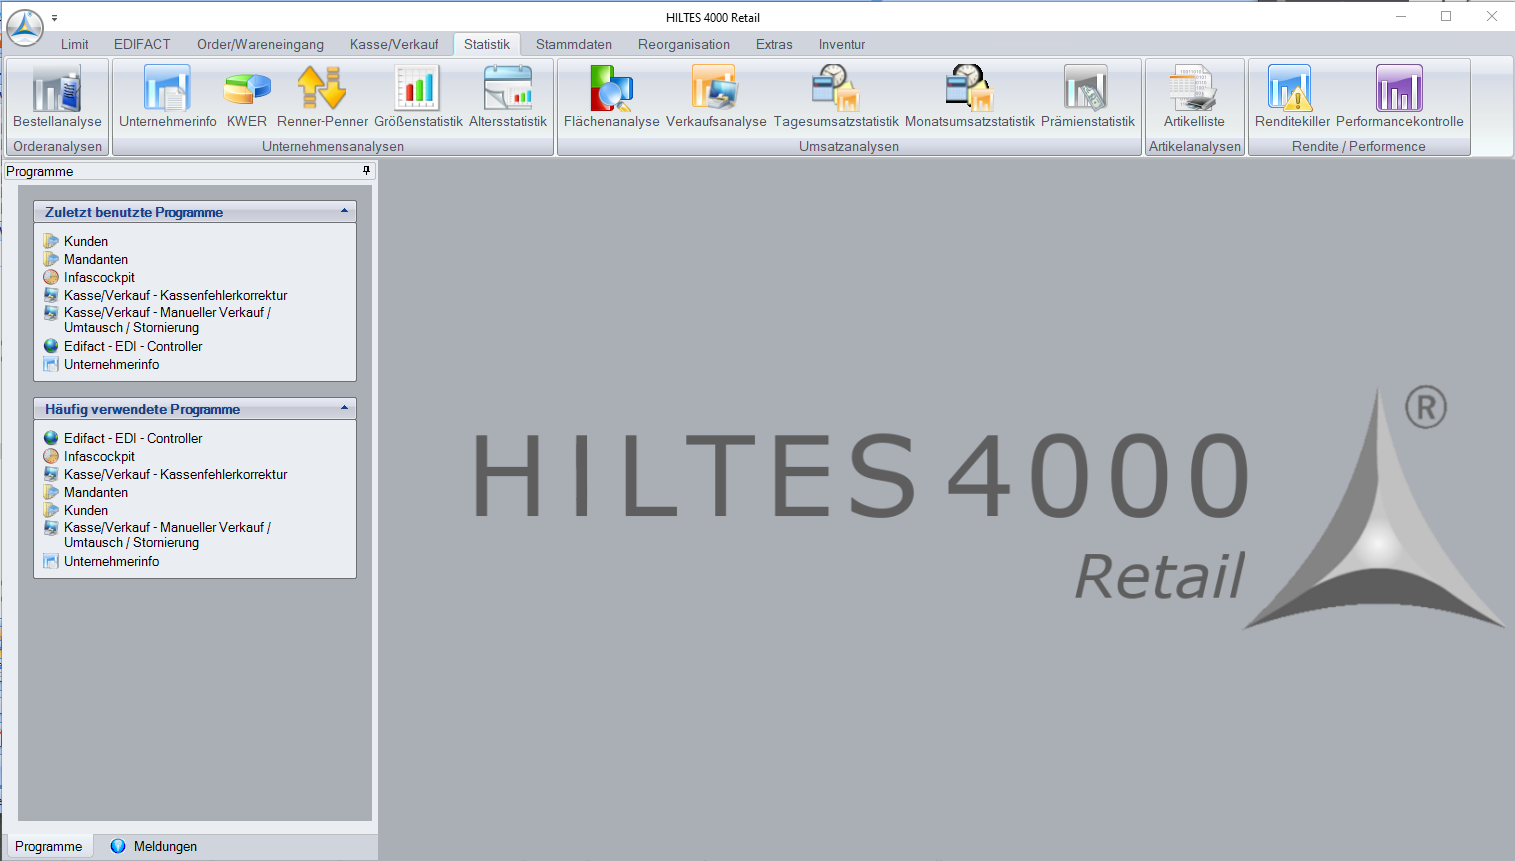 HILTES 4000 Retail